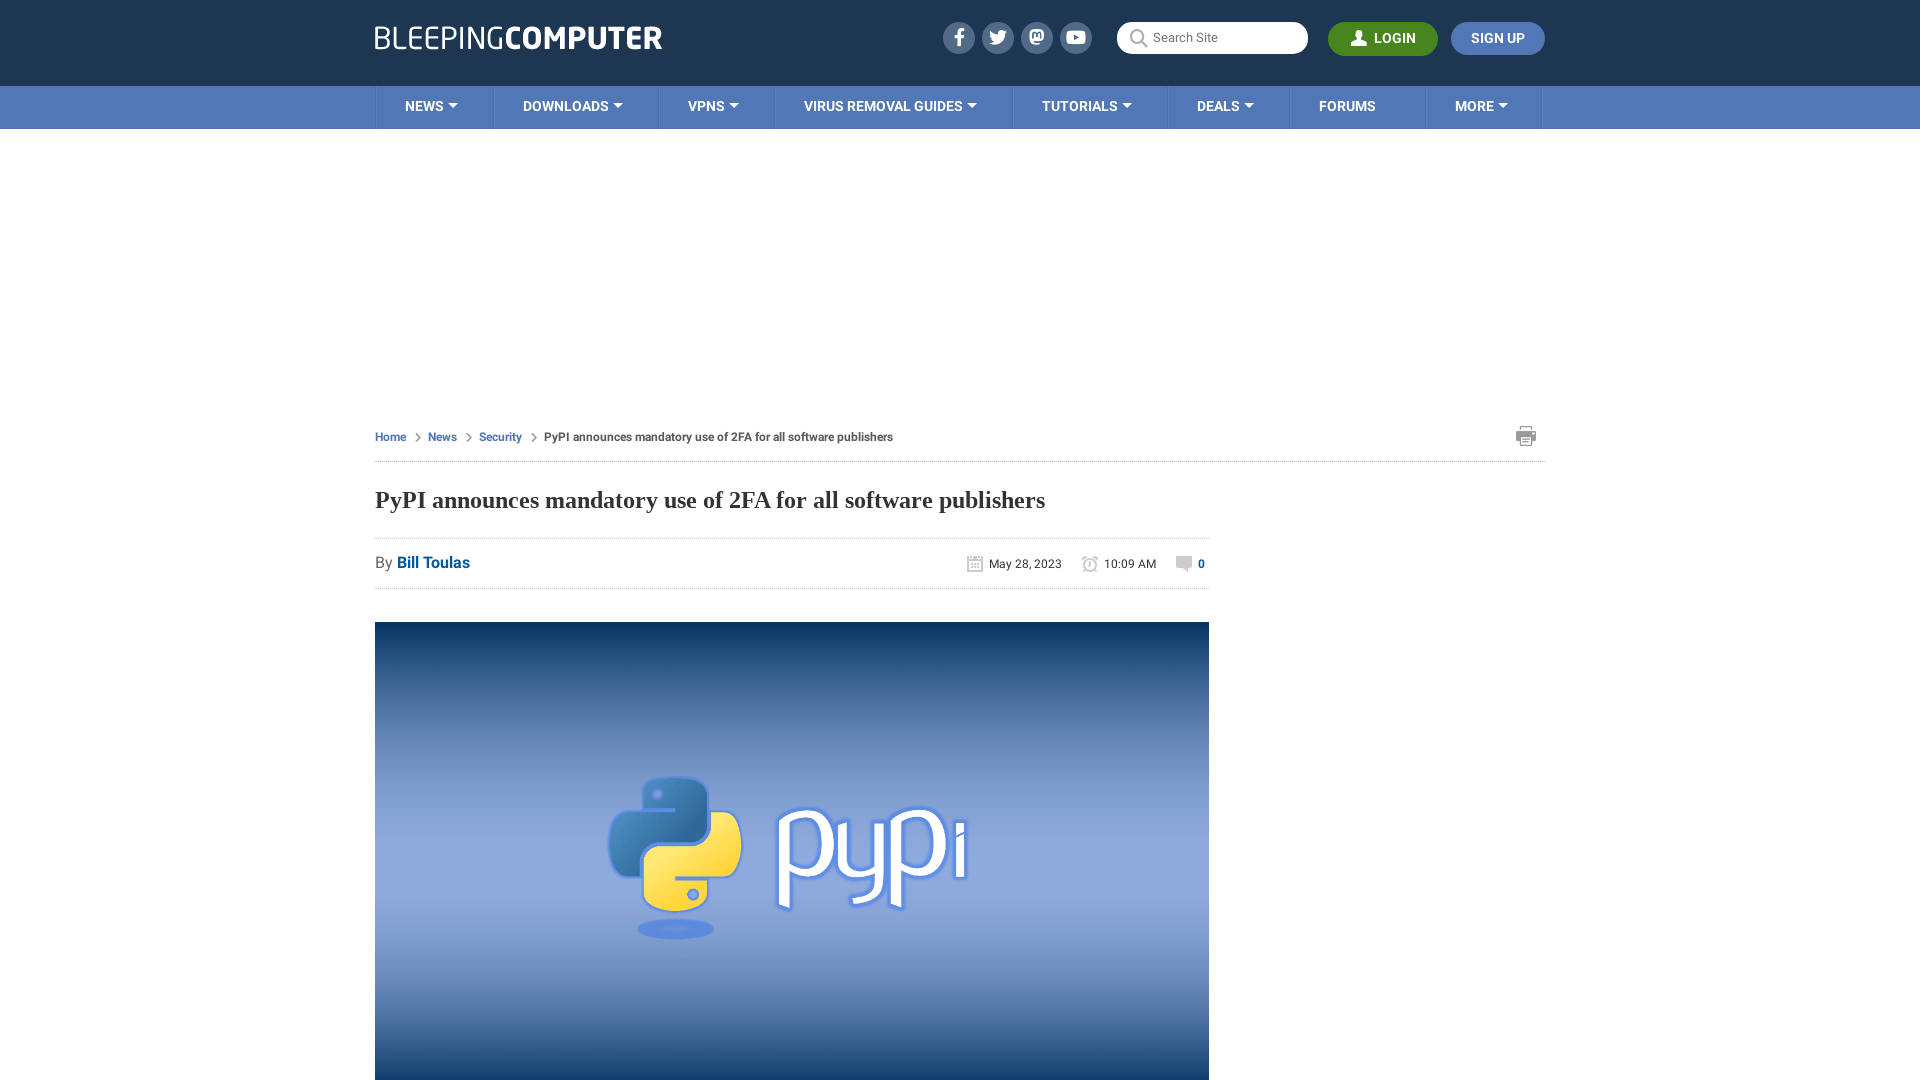 PyPI announces mandatory use of 2FA for all software publishers